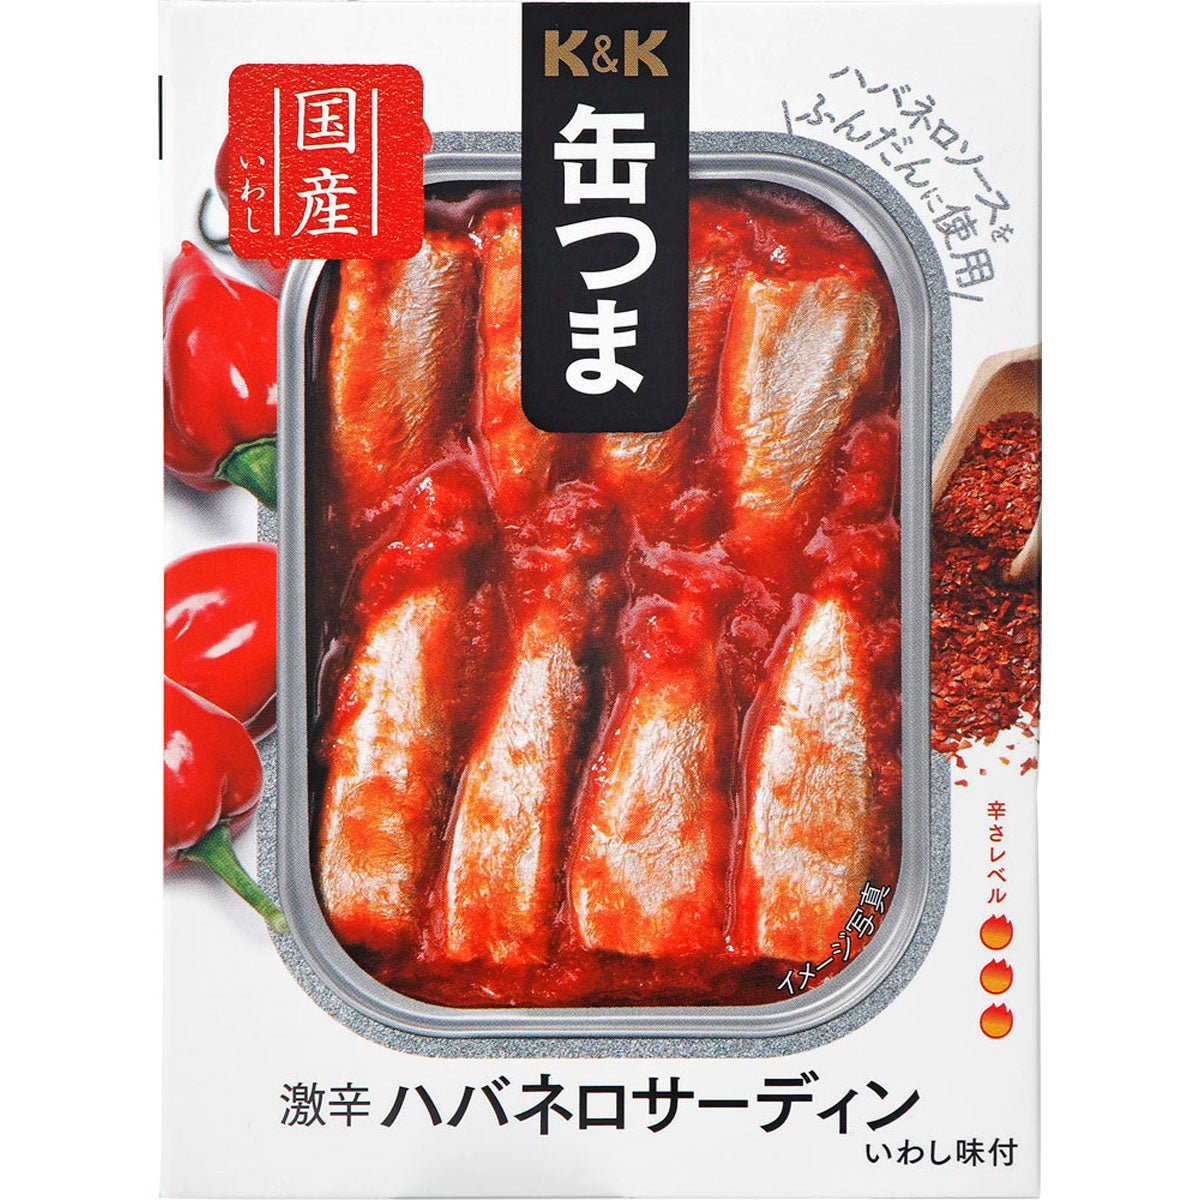 K&K CAN TSUMA una sardina habediza con picante picante caliente